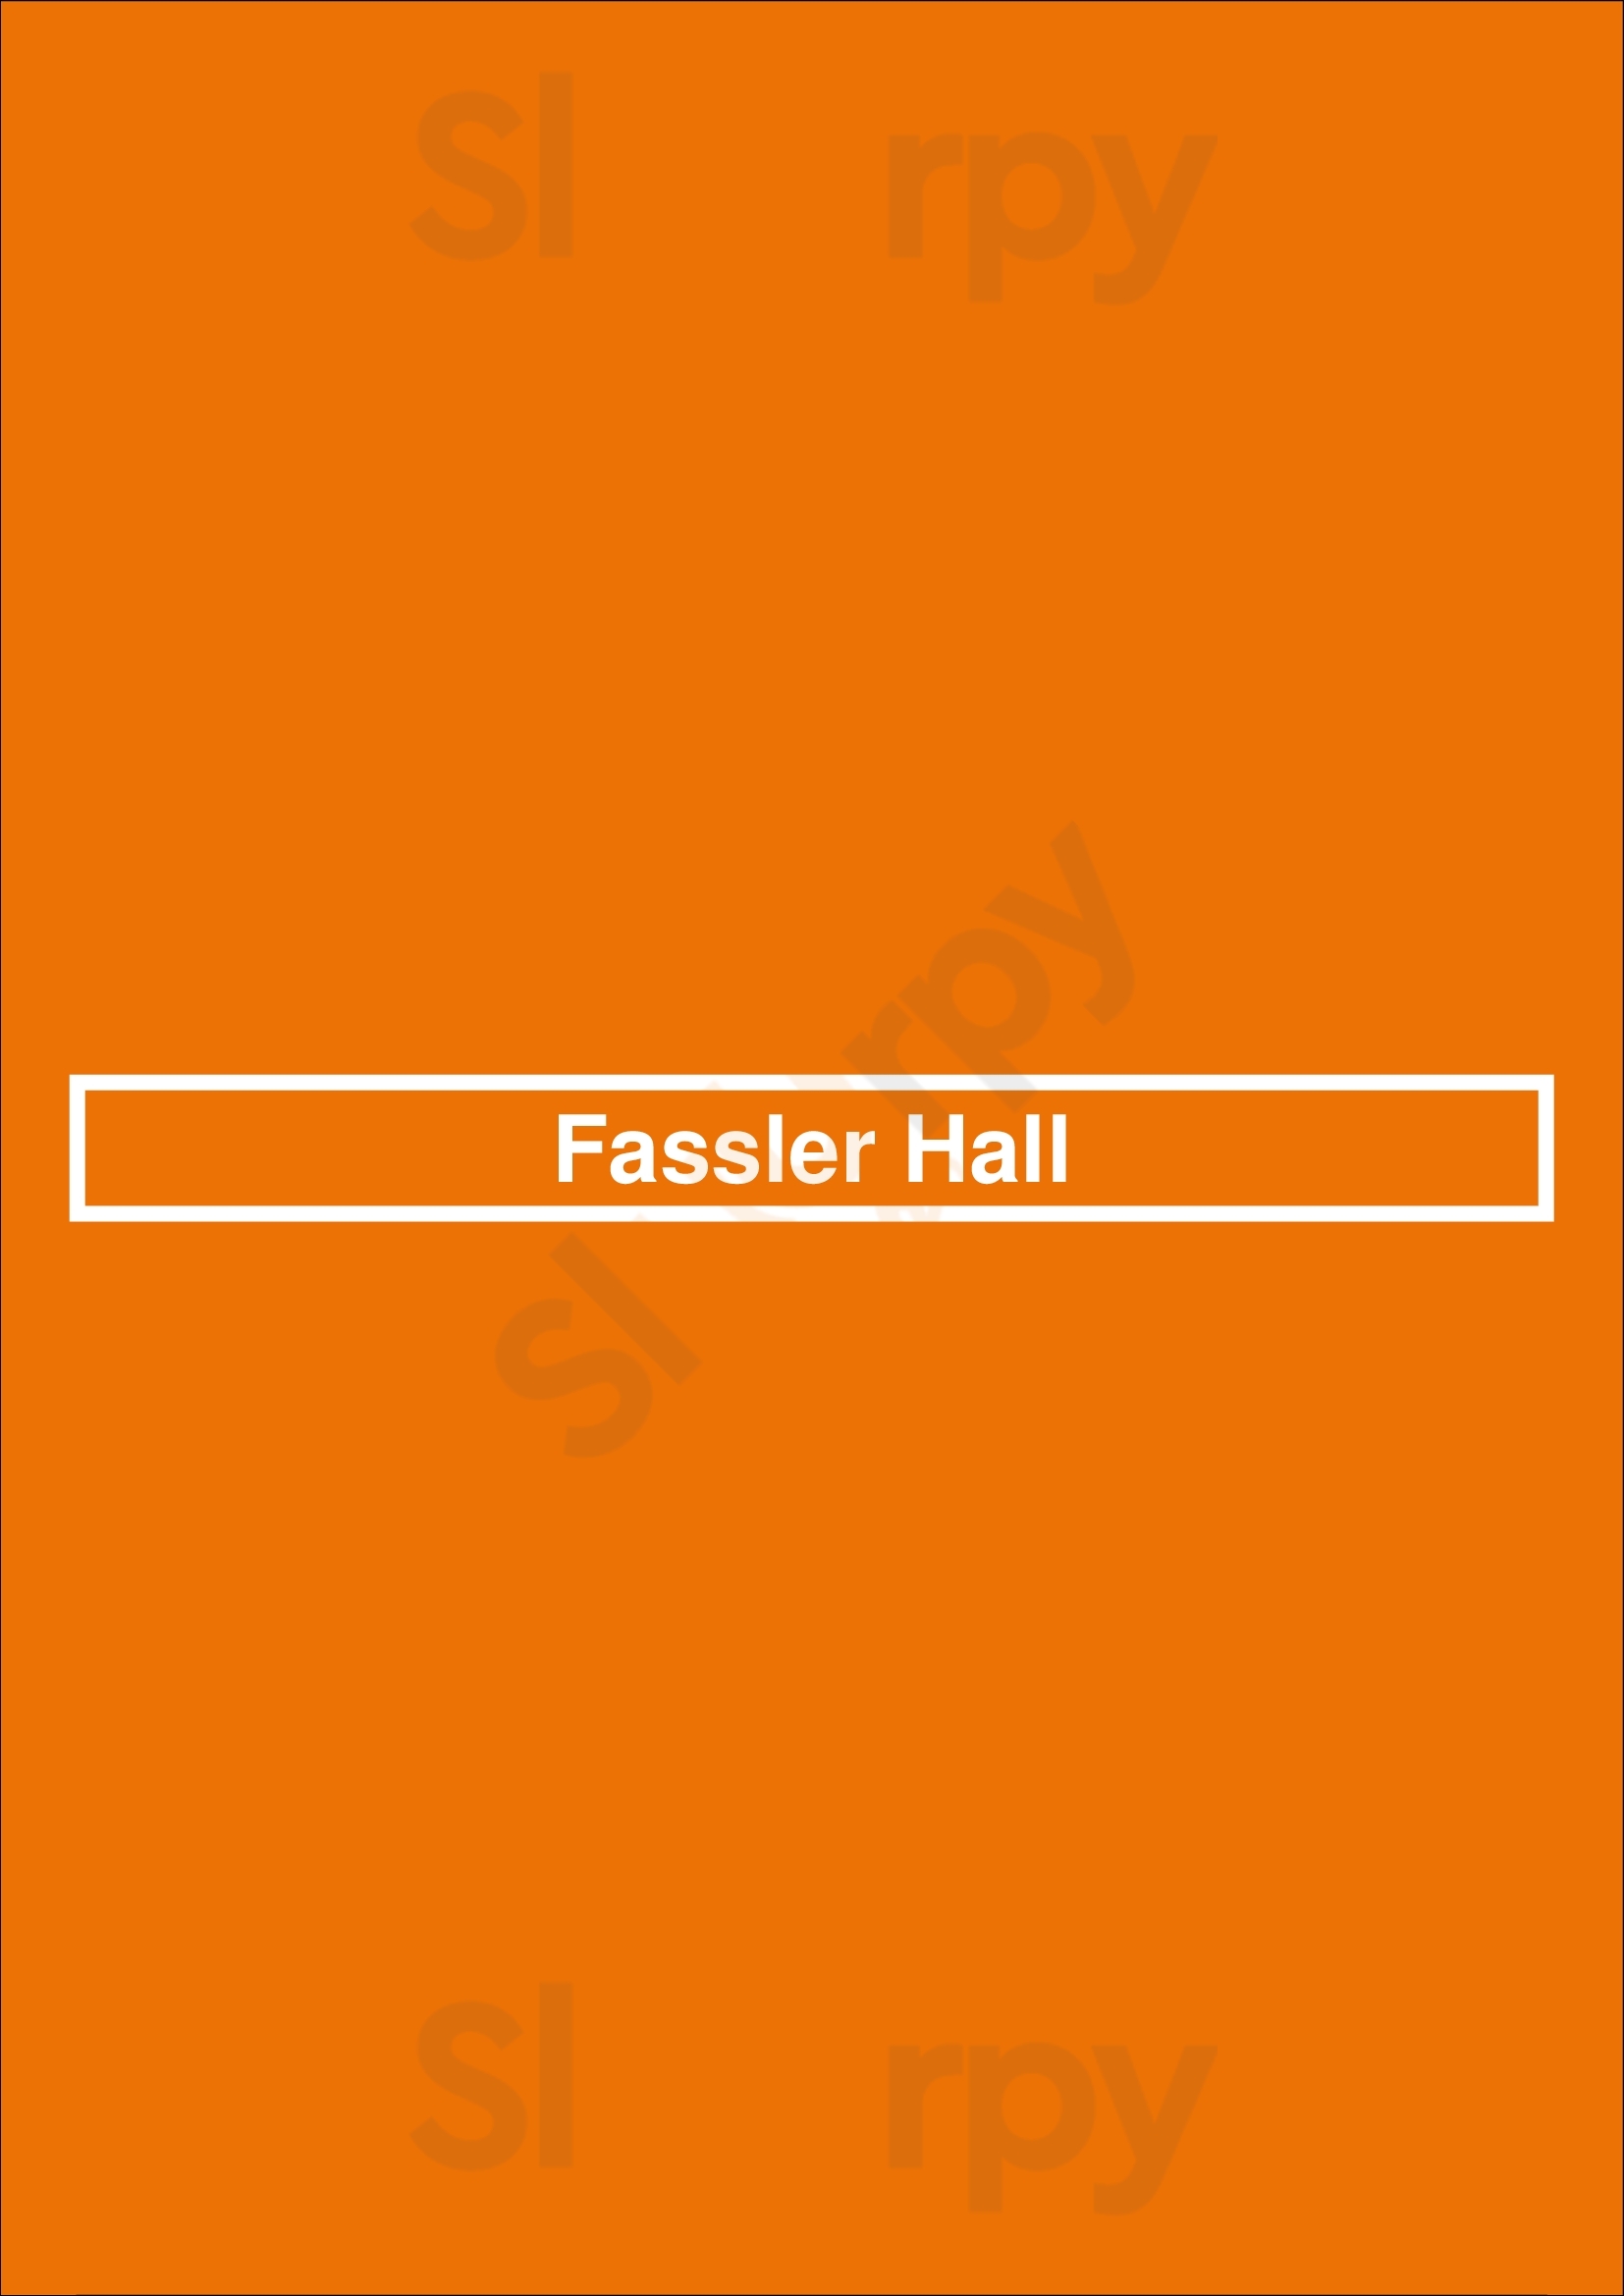 Fassler Hall Tulsa Menu - 1